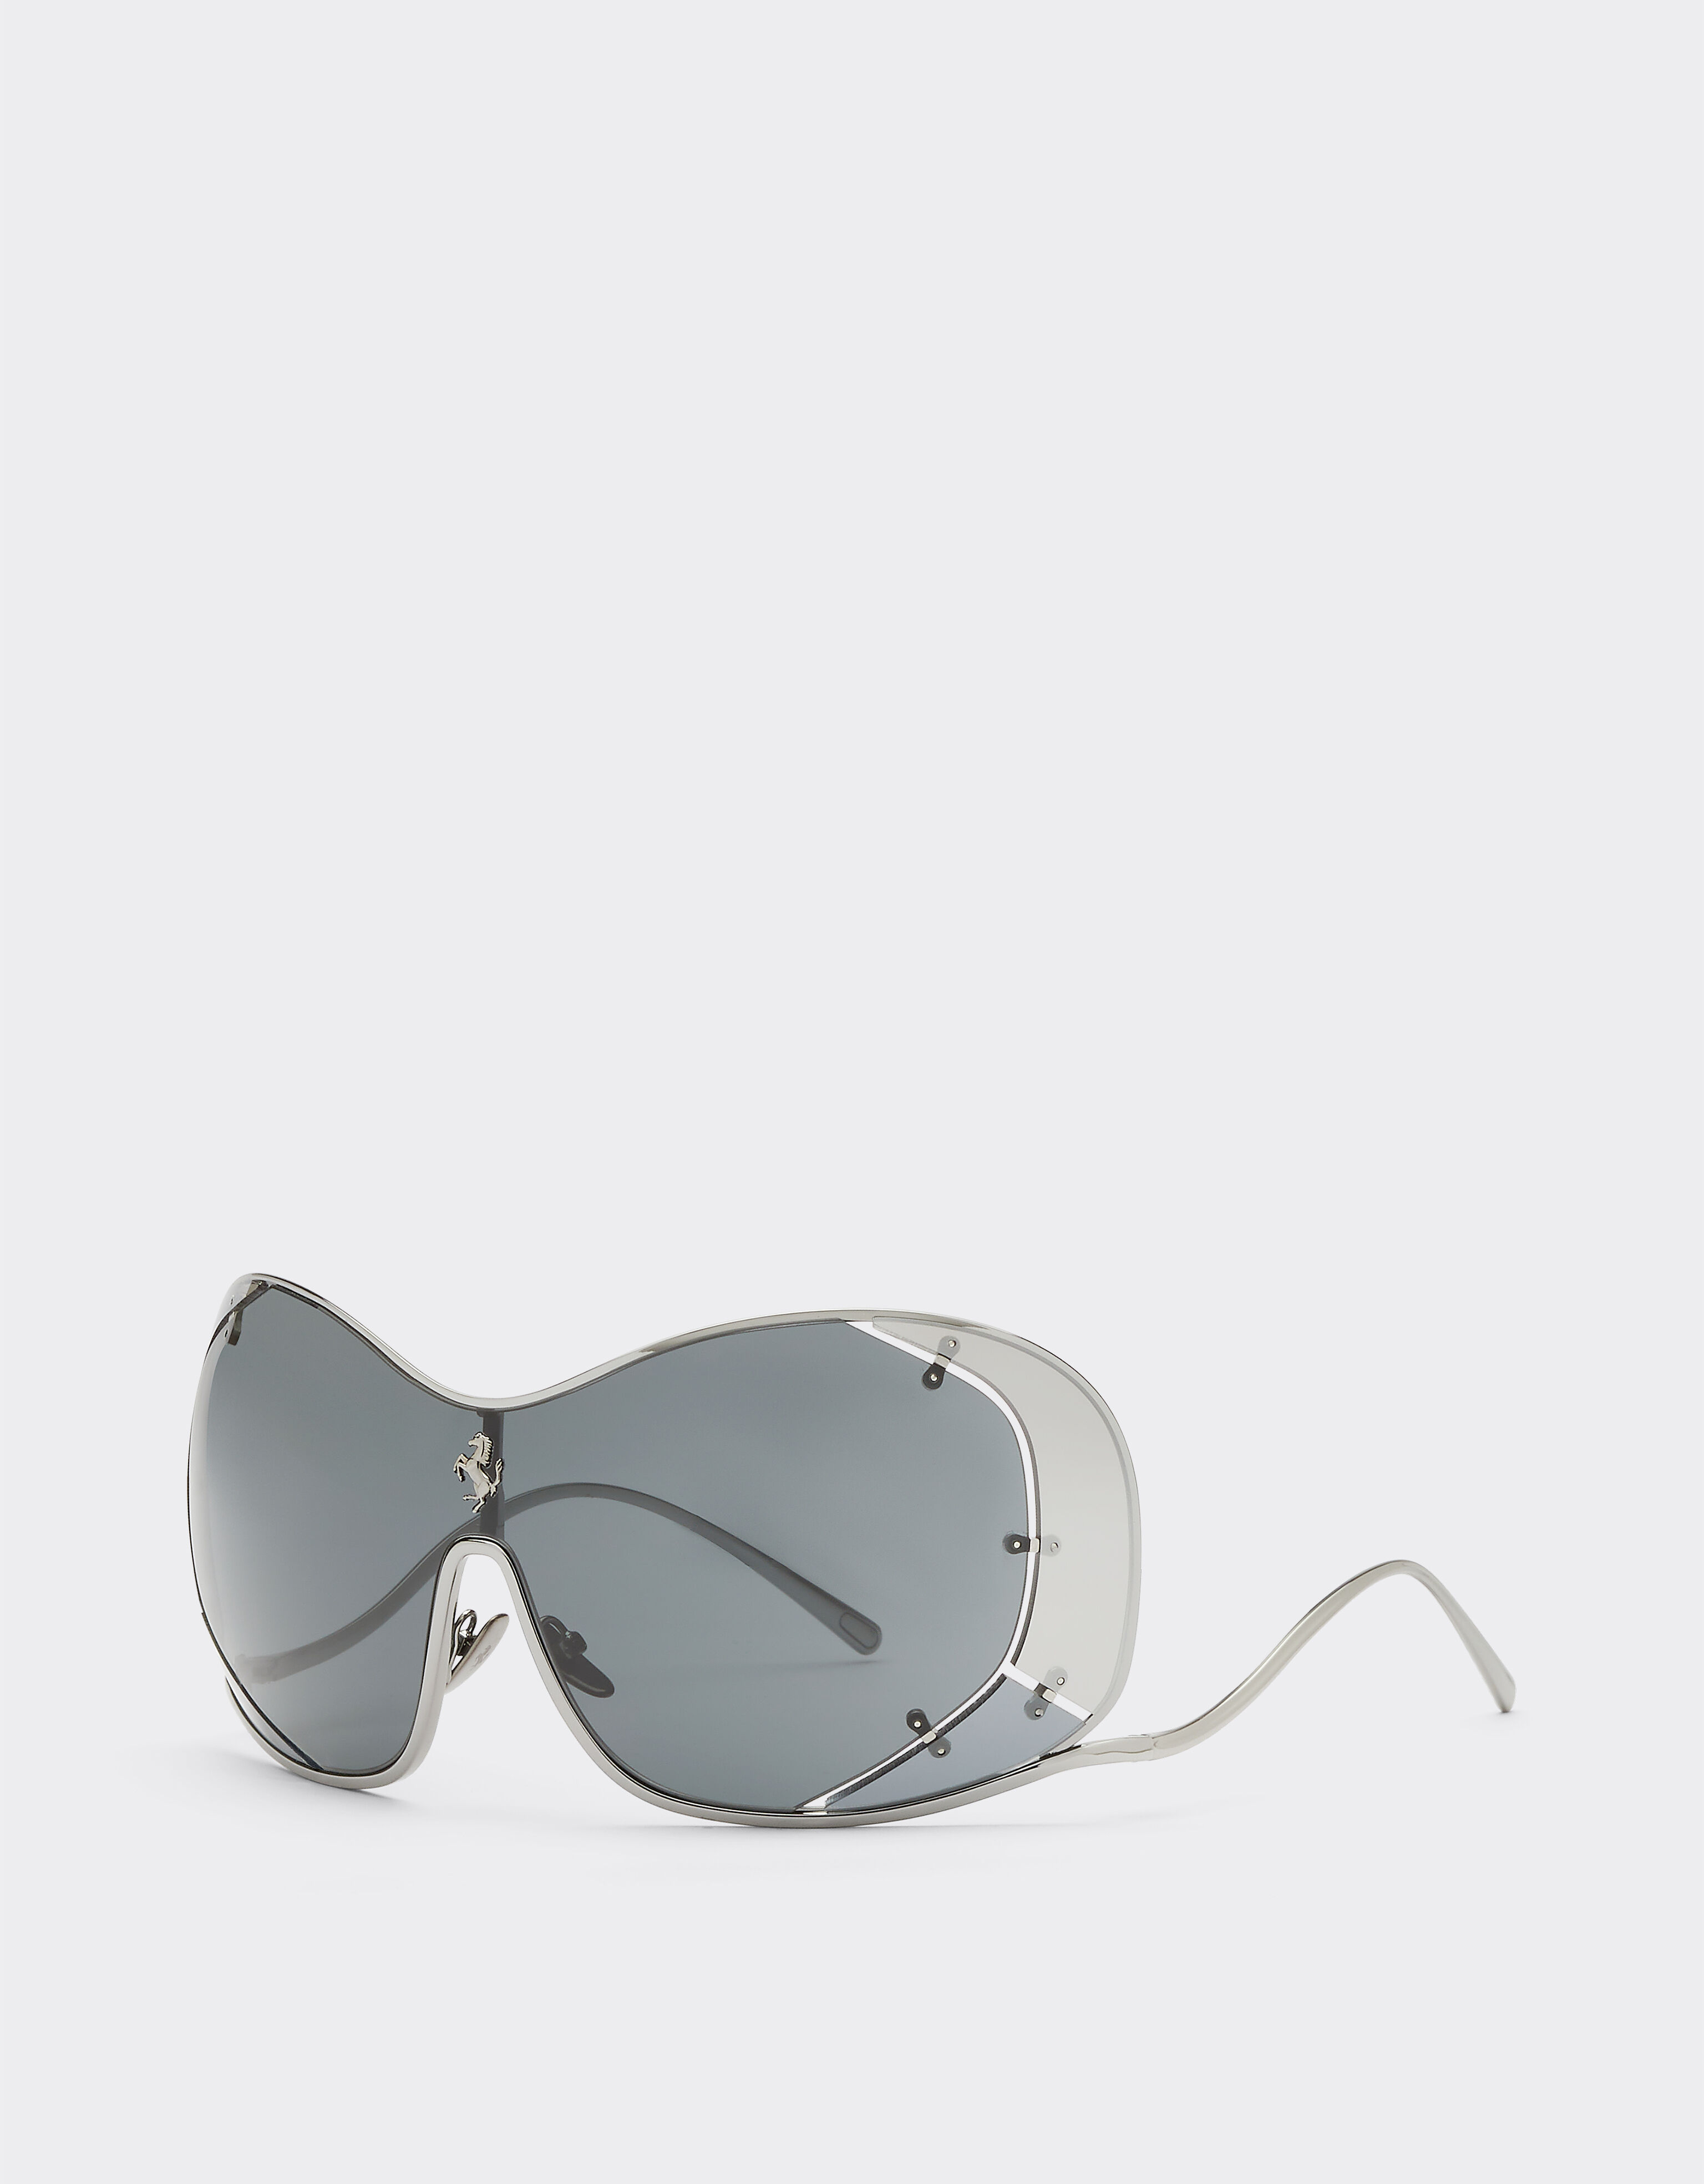 Ferrari Ferrari-Sonnenbrille mit grauen Gläsern Dunkelgrau F0640f